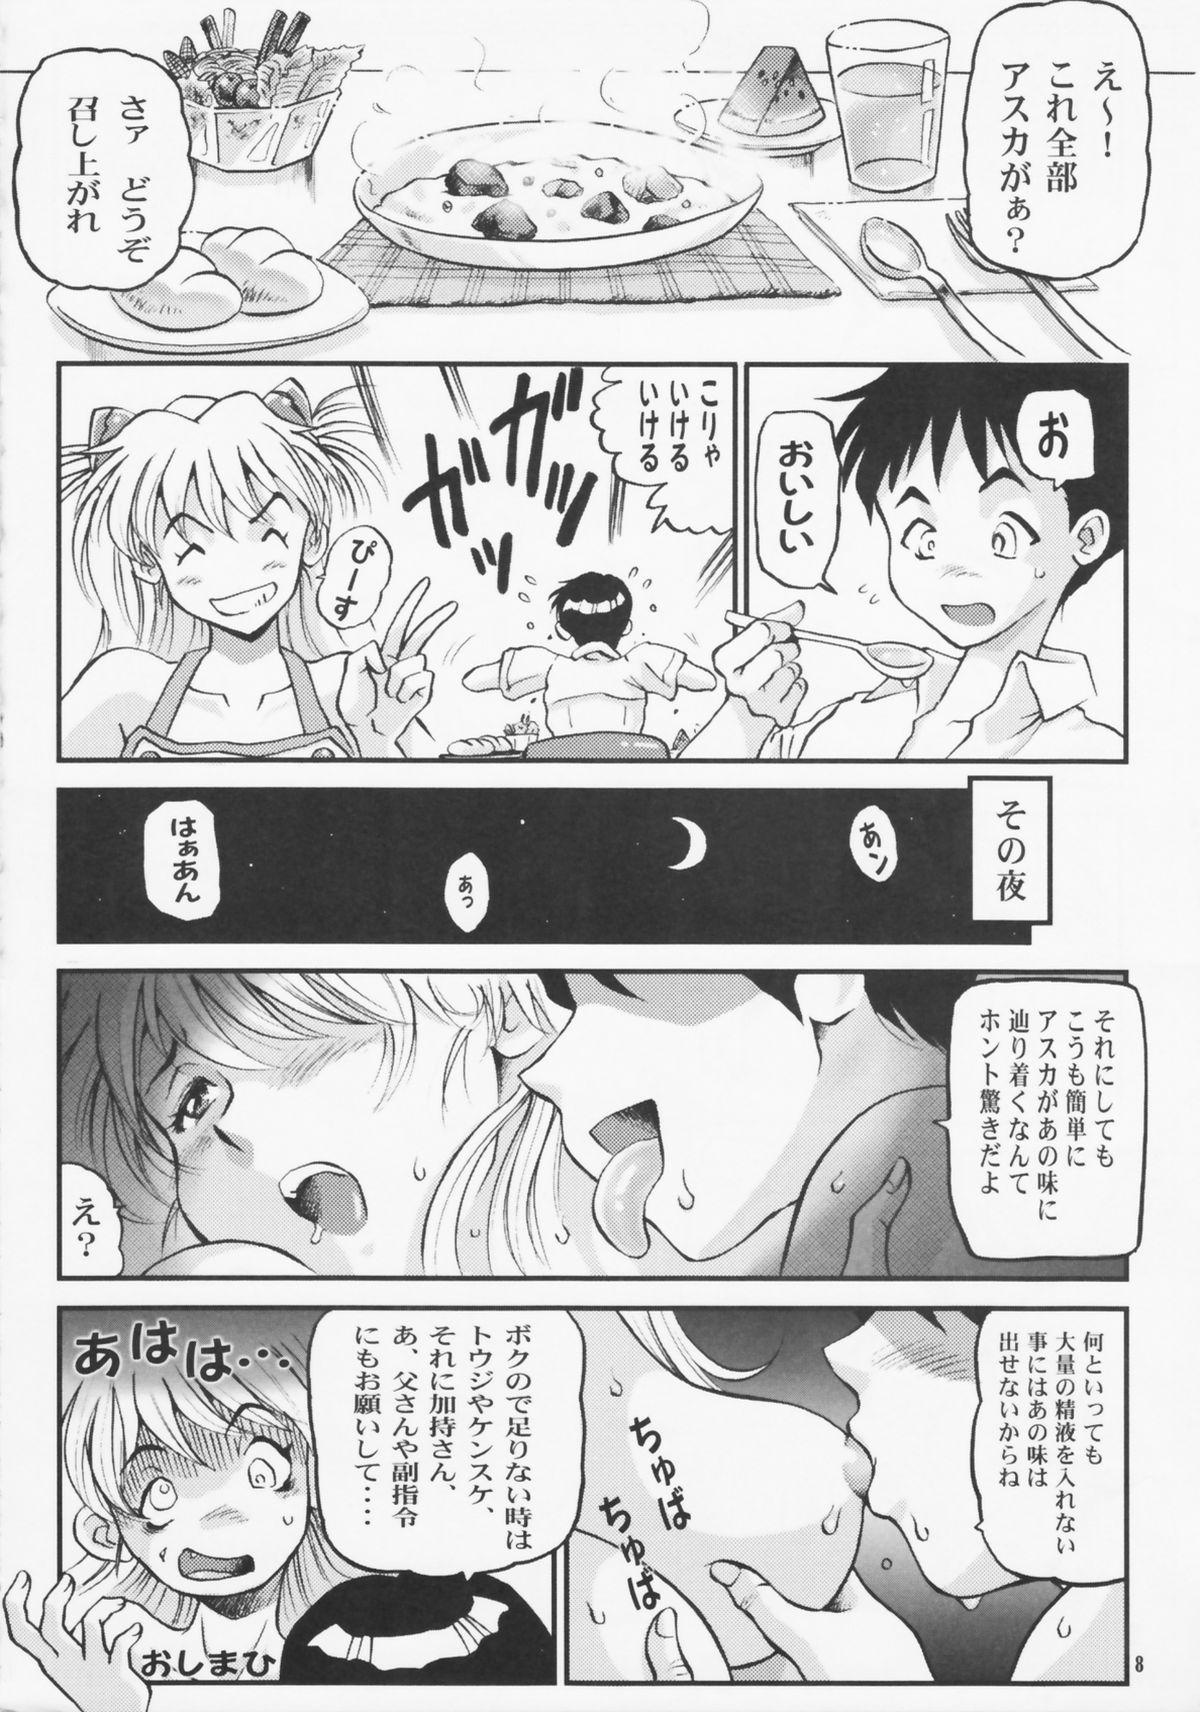 Skirt Shin Han-juuryoku XXII - Neon genesis evangelion Pokemon Amateur Xxx - Page 8